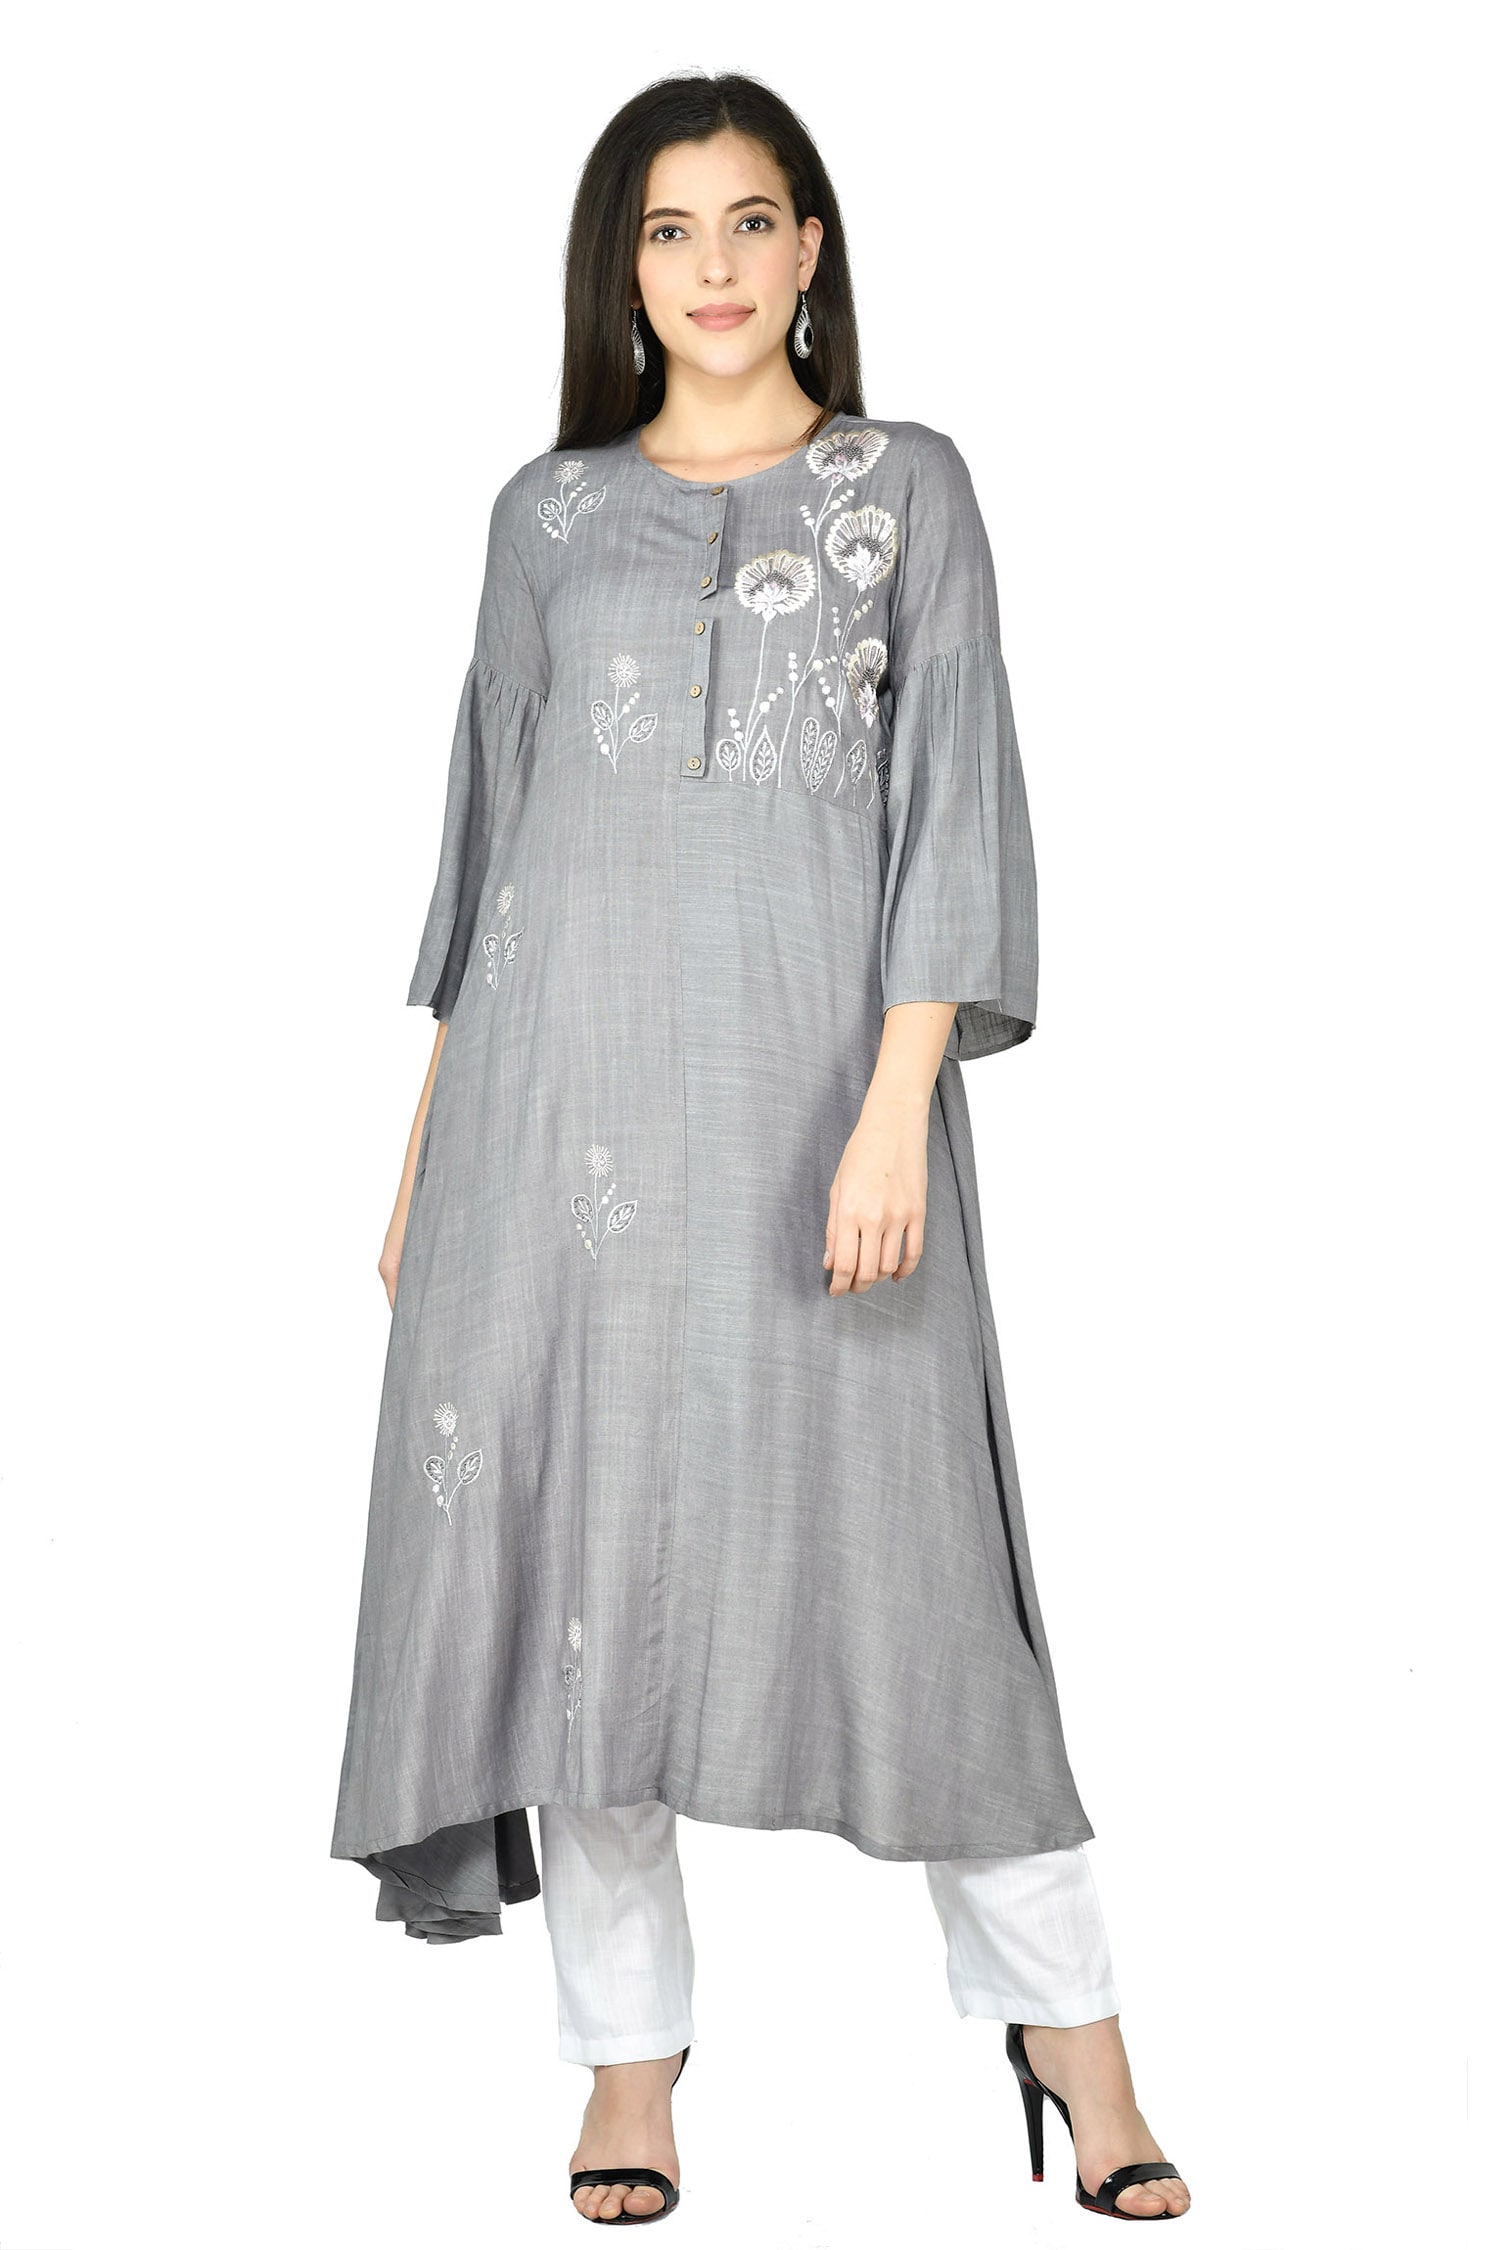 Adara Khan Grey Rayon Slub Embroidered Tunic